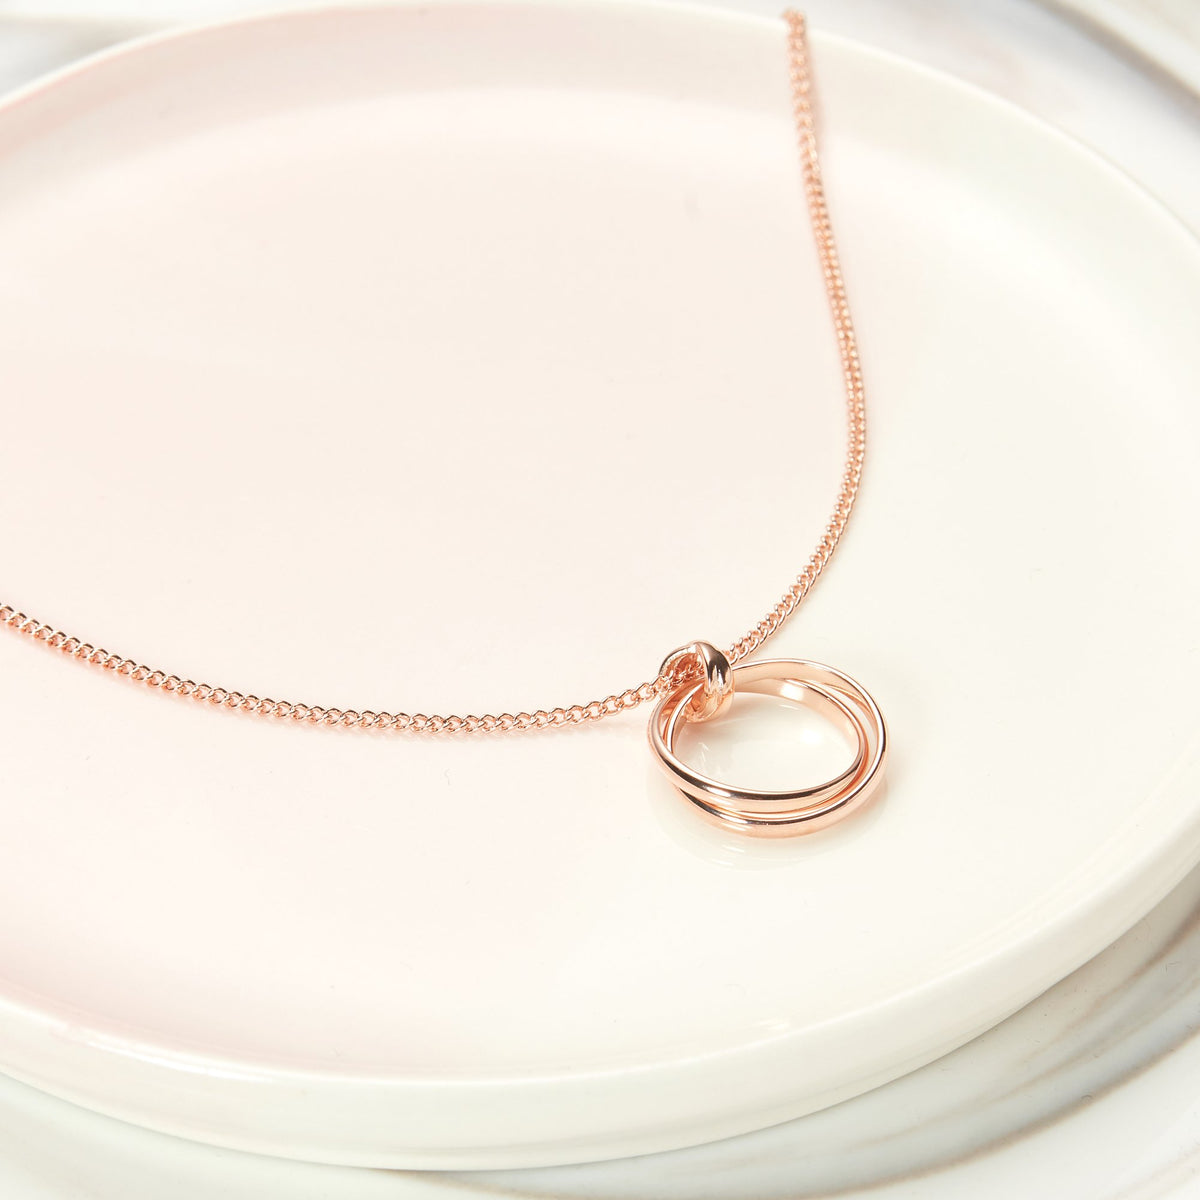 Confirmation Necklace - Dear Ava, Jewelry / Necklaces / Pendants